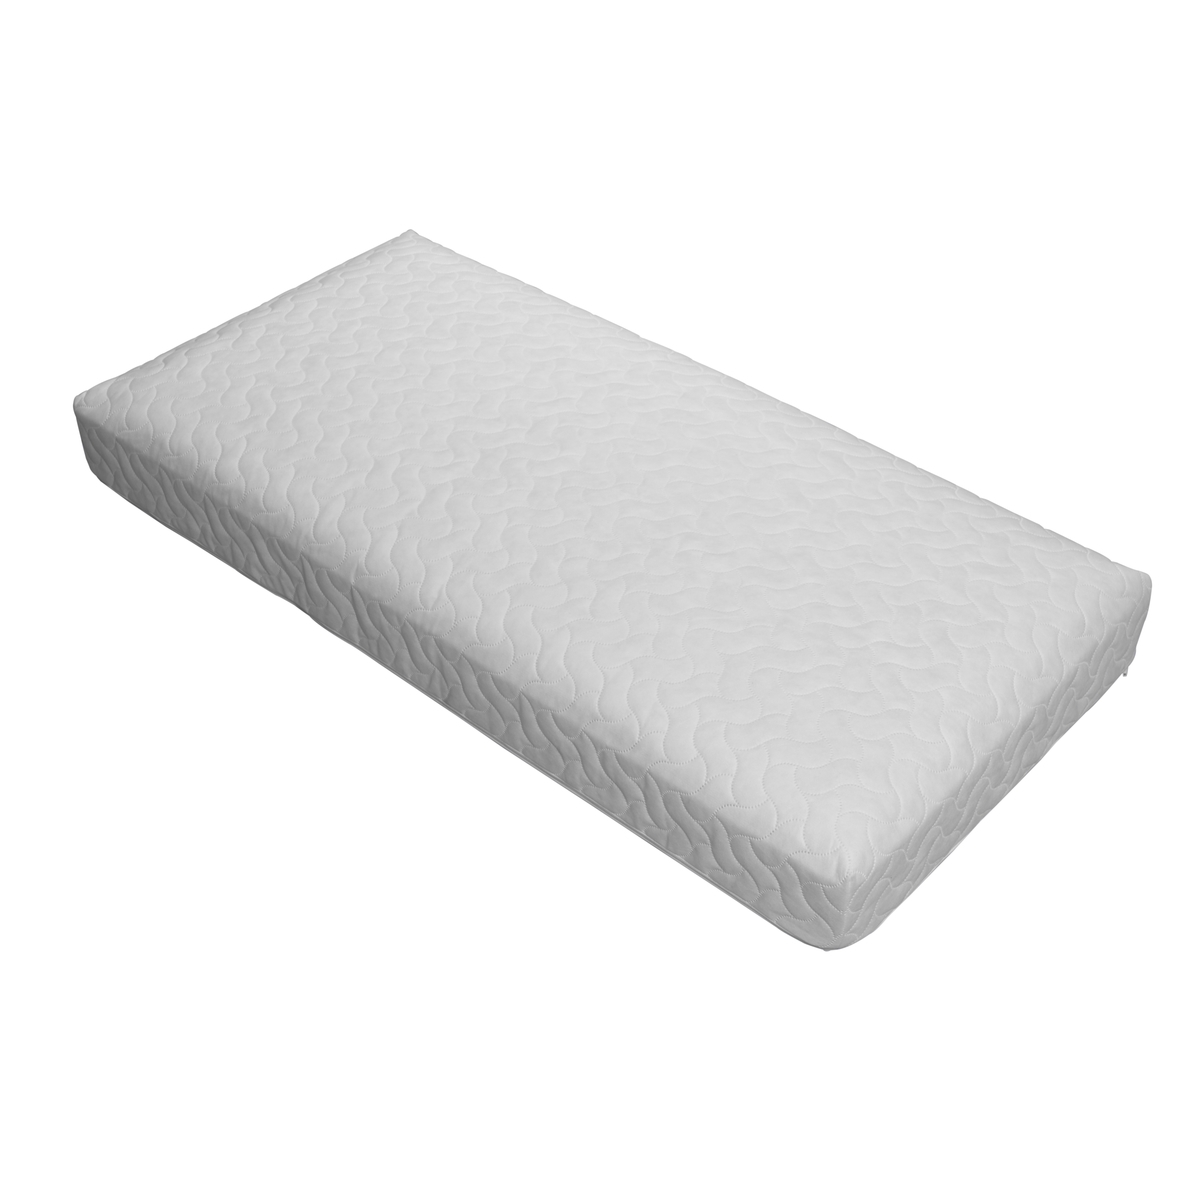 Ventalux Non Allergenic Spring Interior Cot Bed Mattress